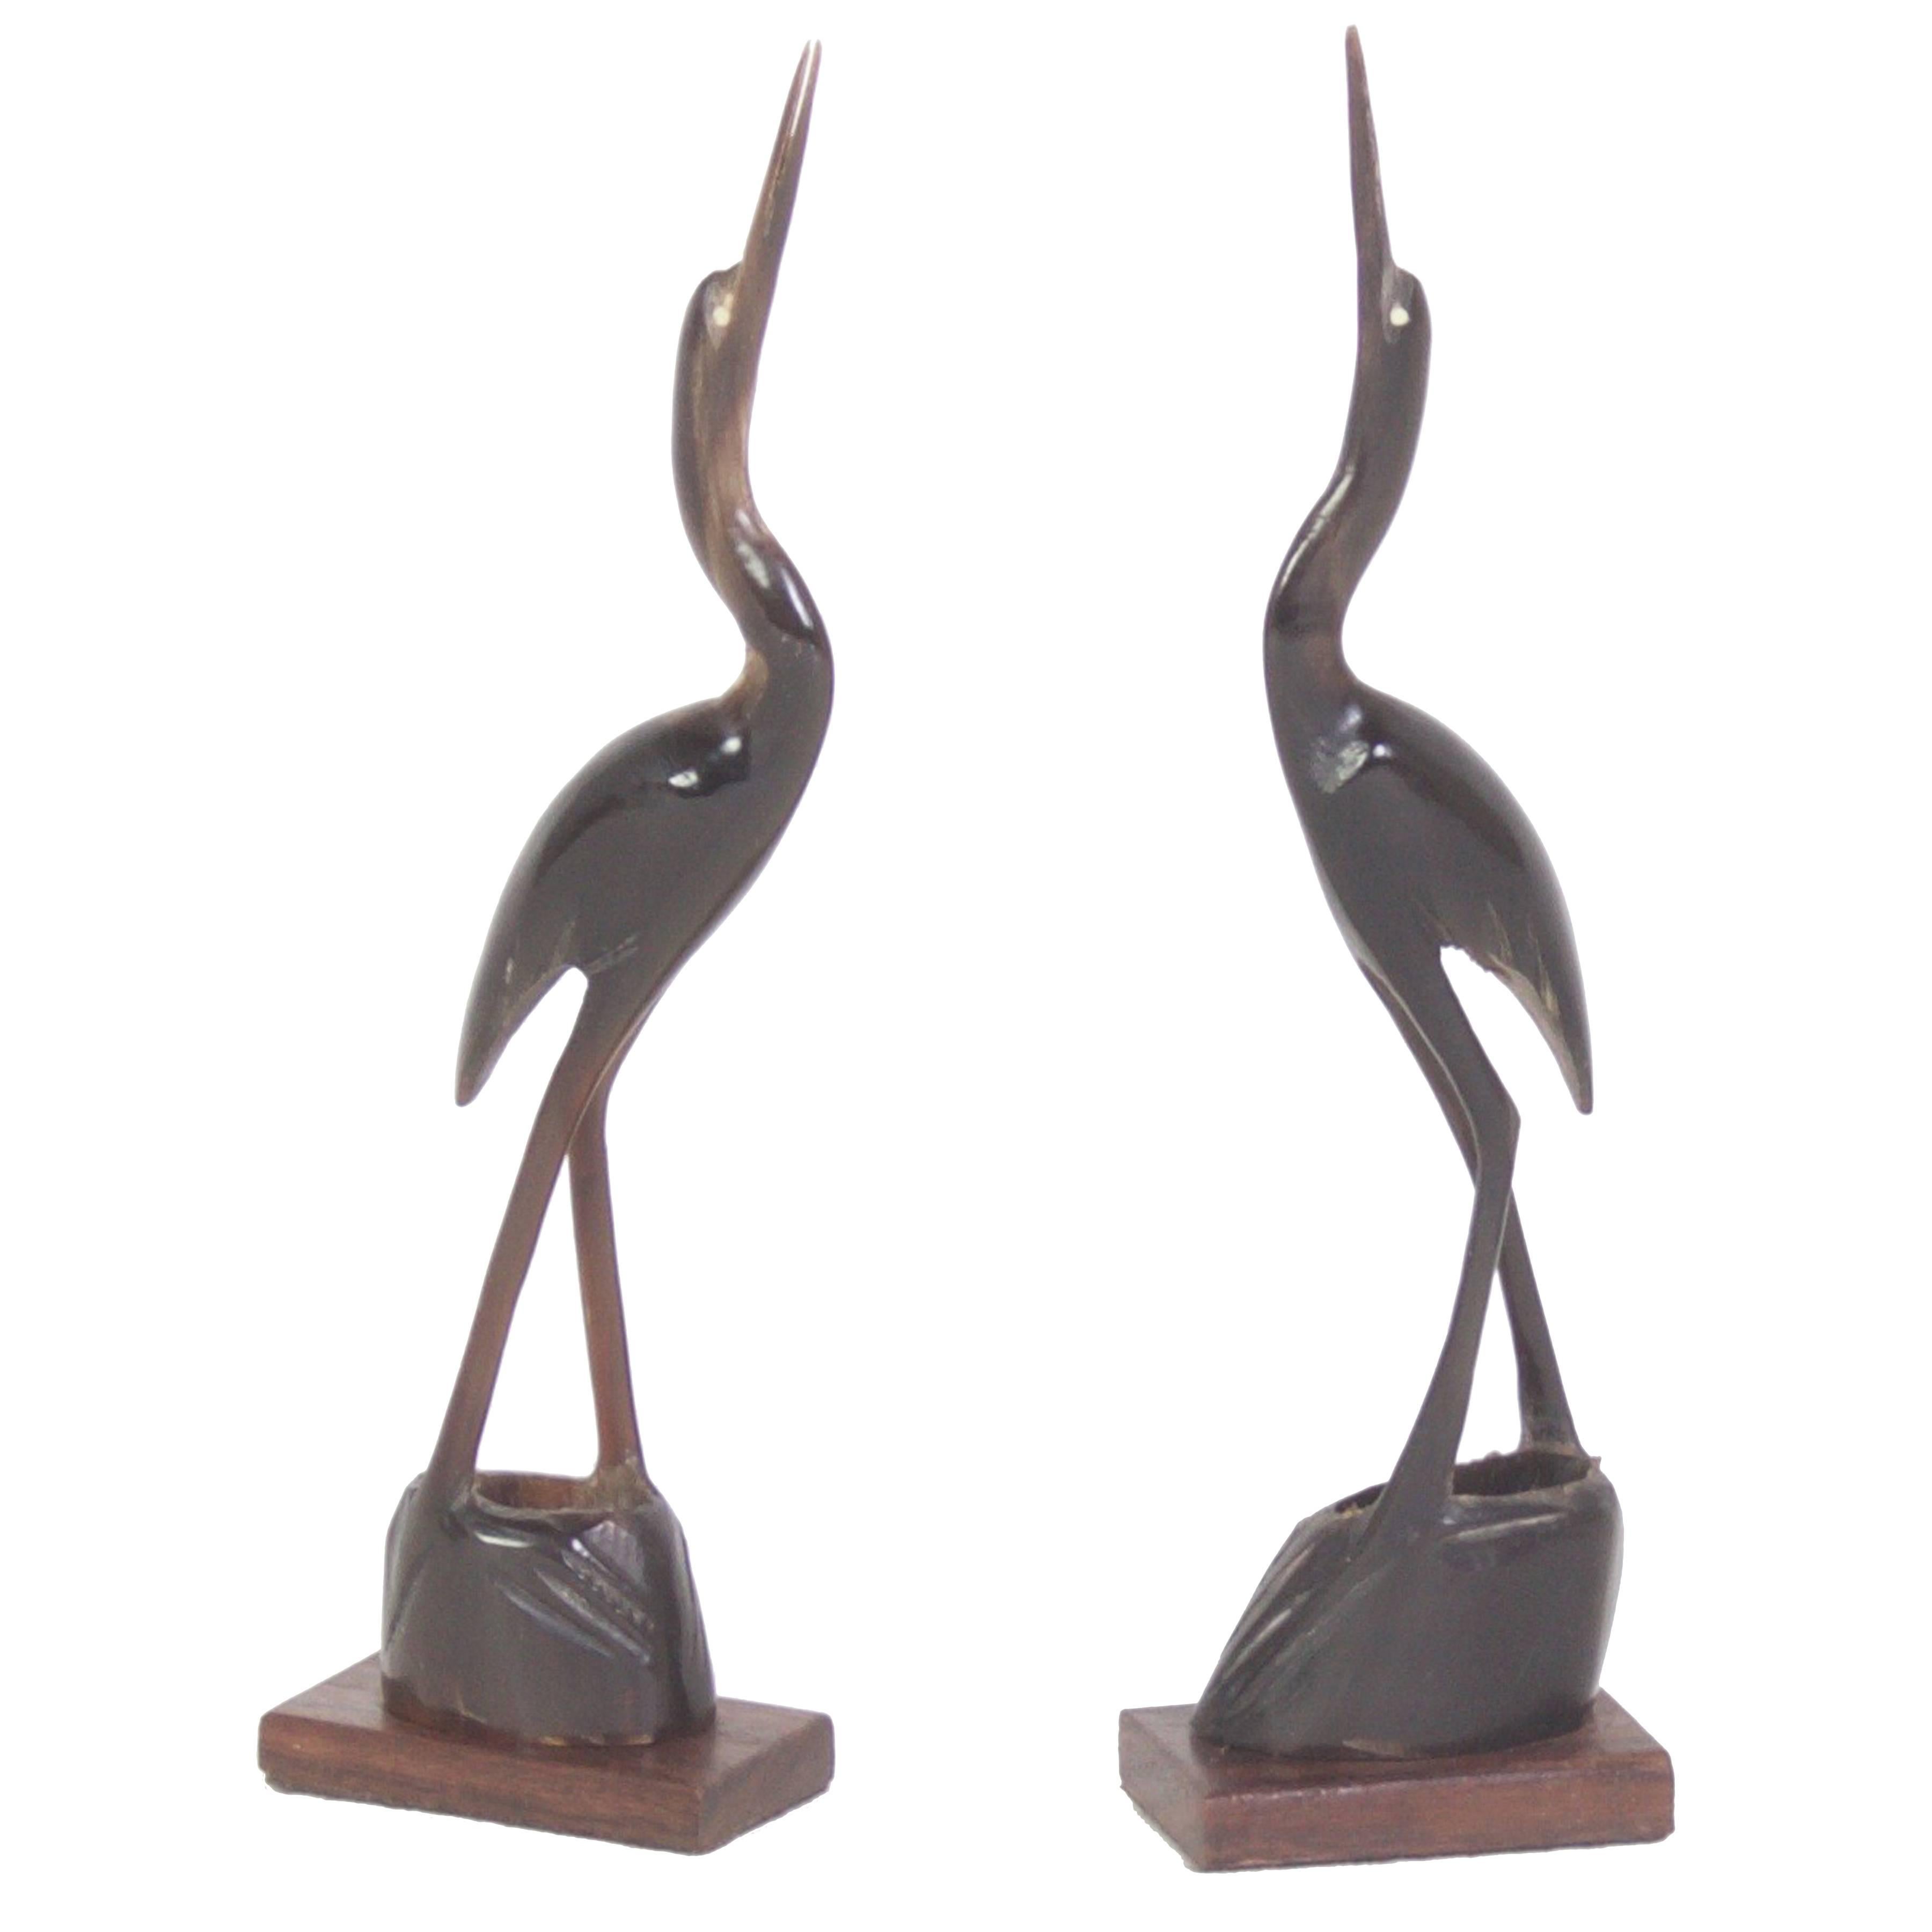 Pair of Mid-Century Carved Steer Horn Bird Sculptures